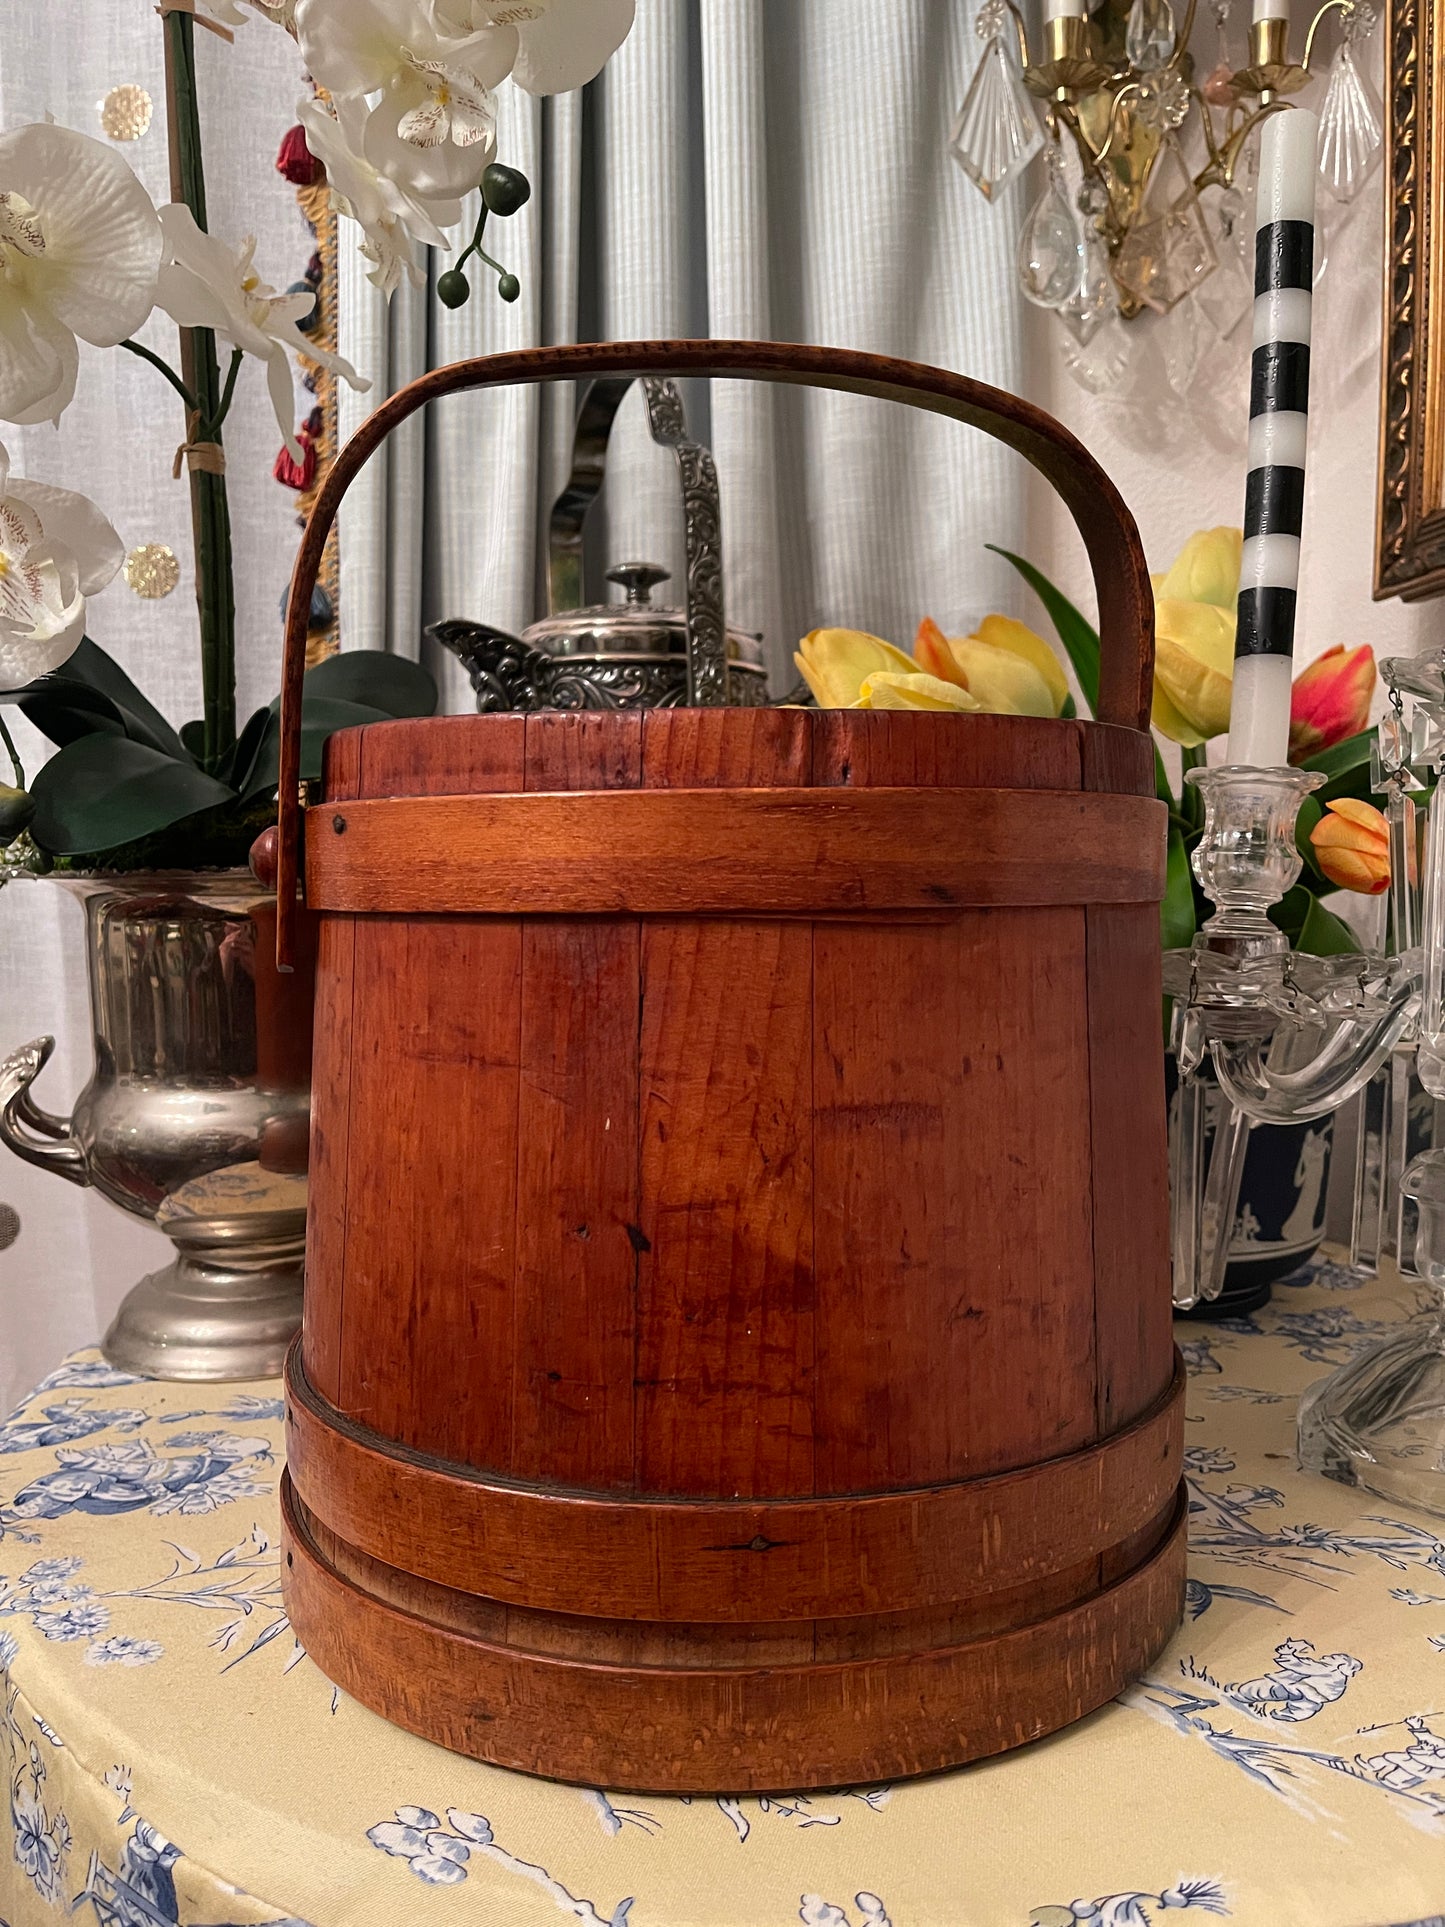 19th Century Firkin Bucket